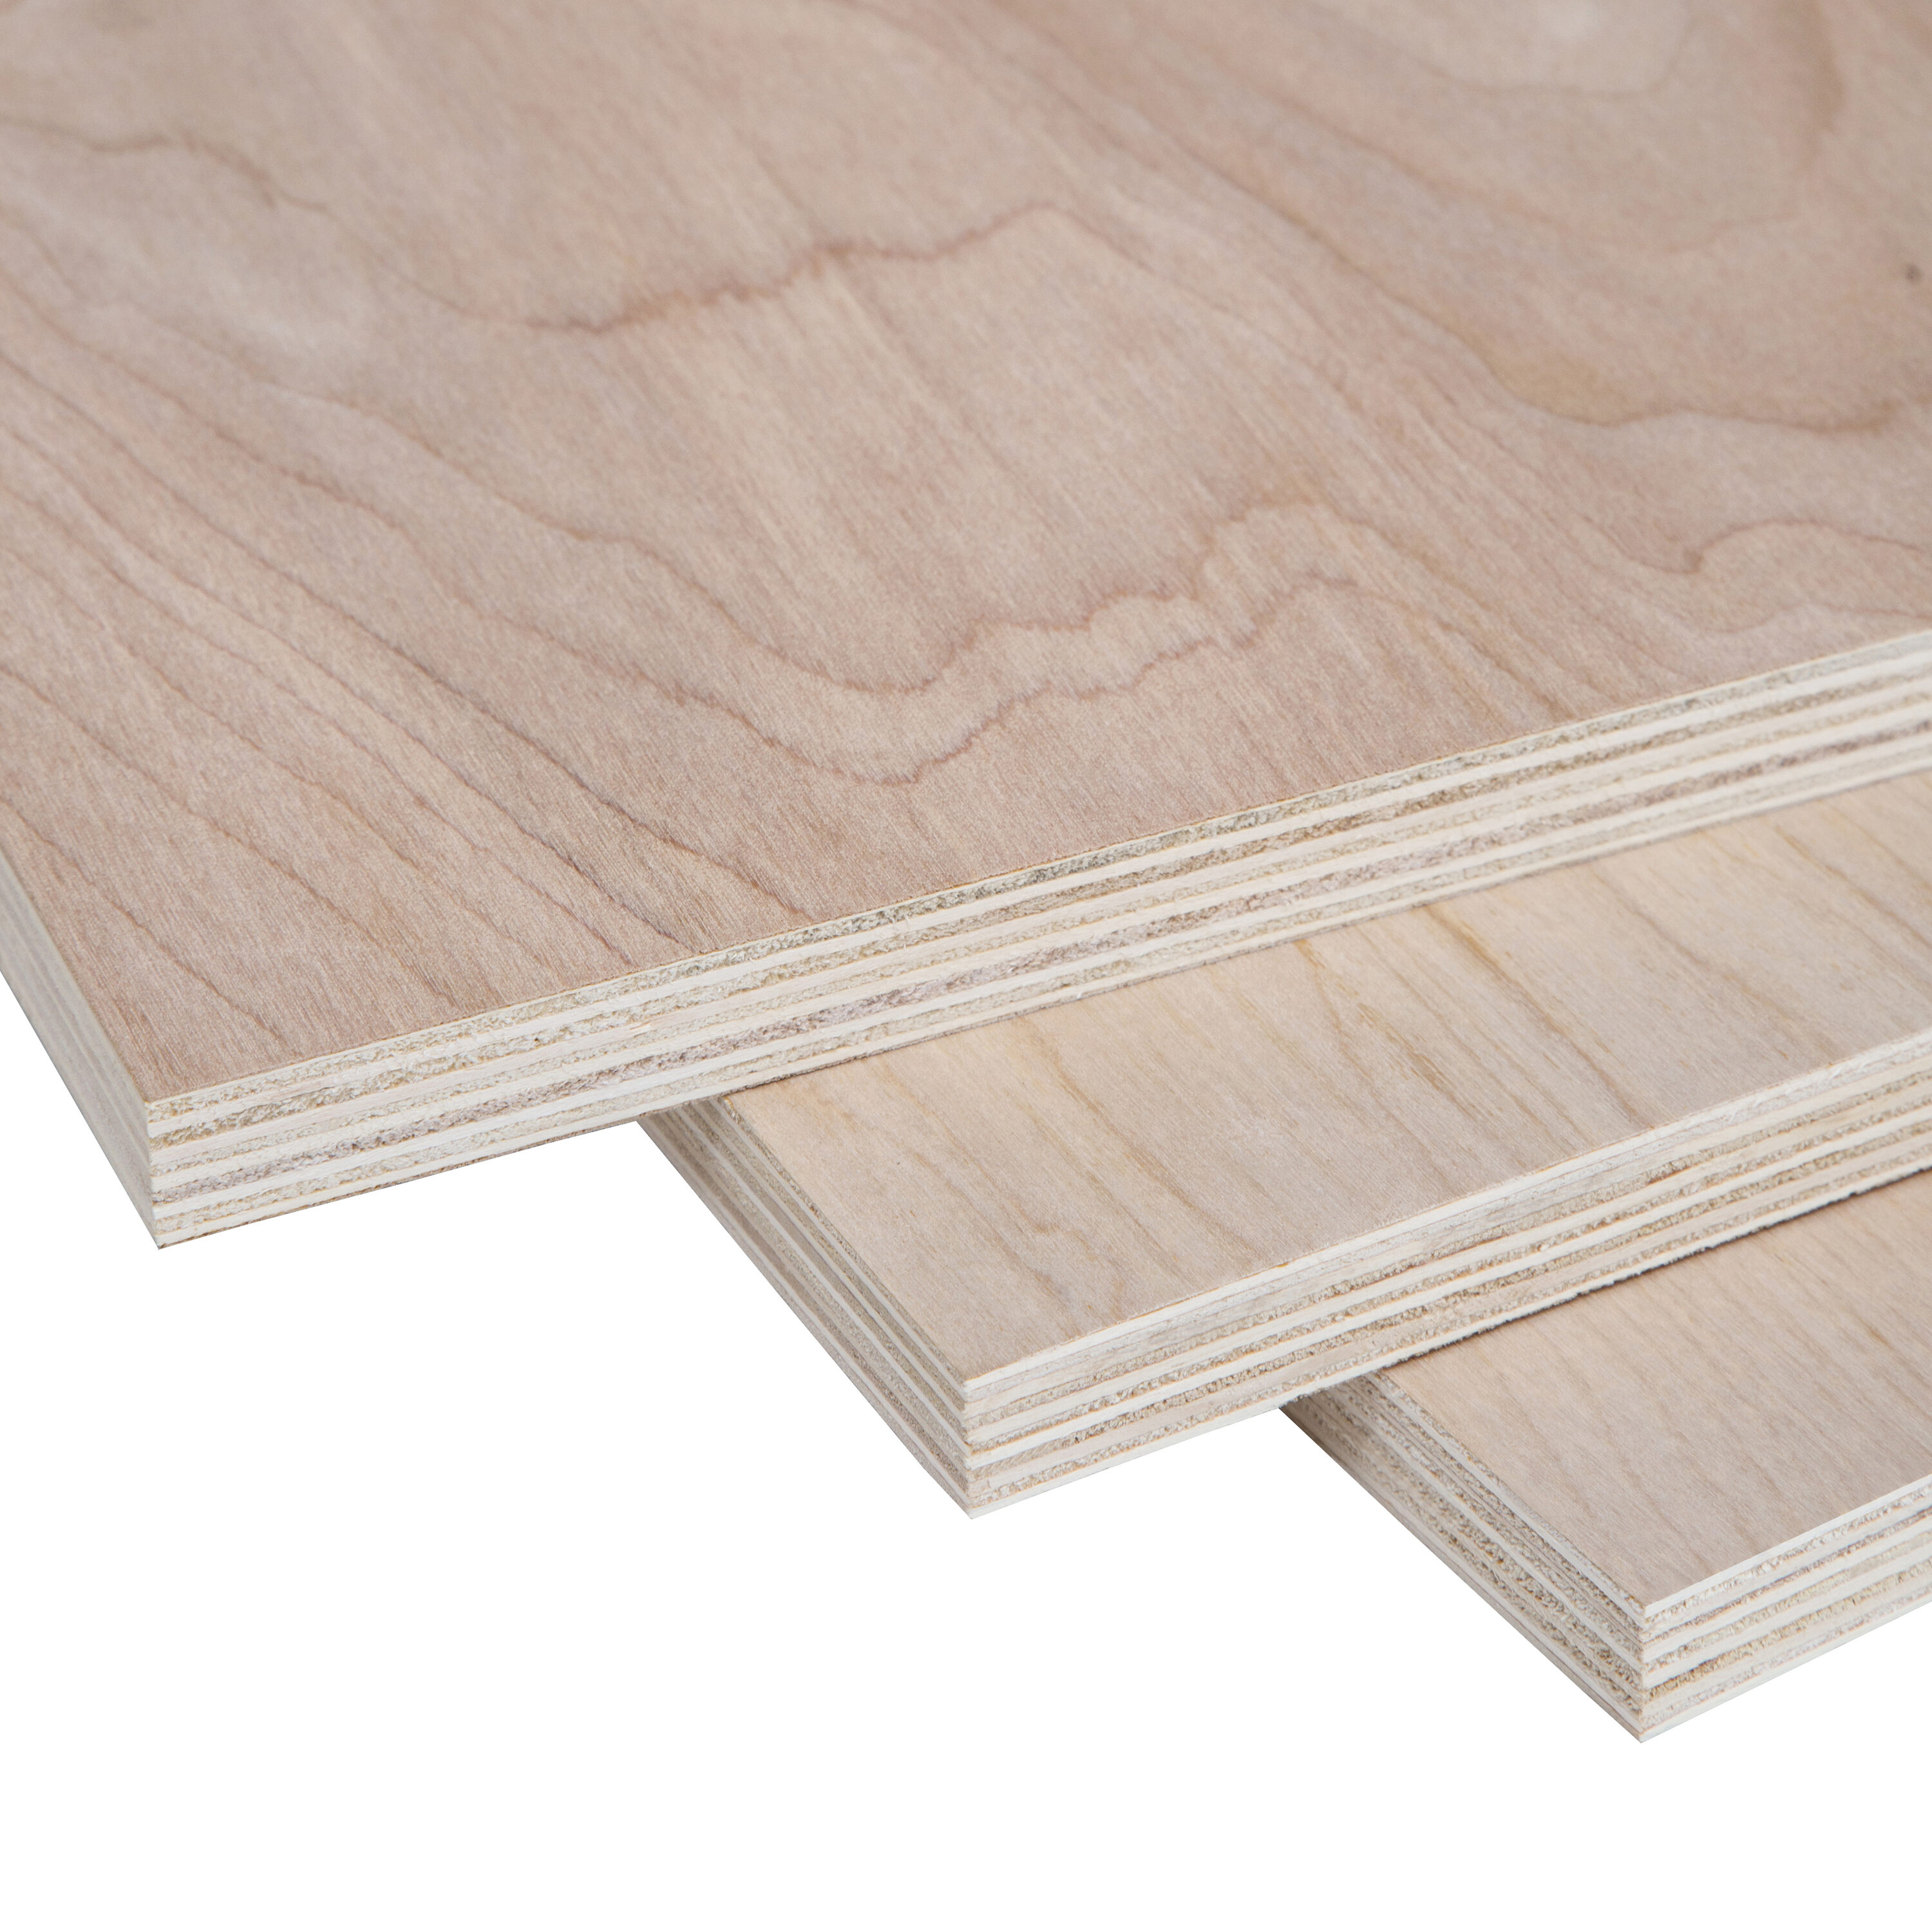 Melamine Plywood Sheet 4X8 High Quality Plywood Used in Furniture,  Flooring, Doors, Kitchen, Cabinets - China Melamine Board, Melamine